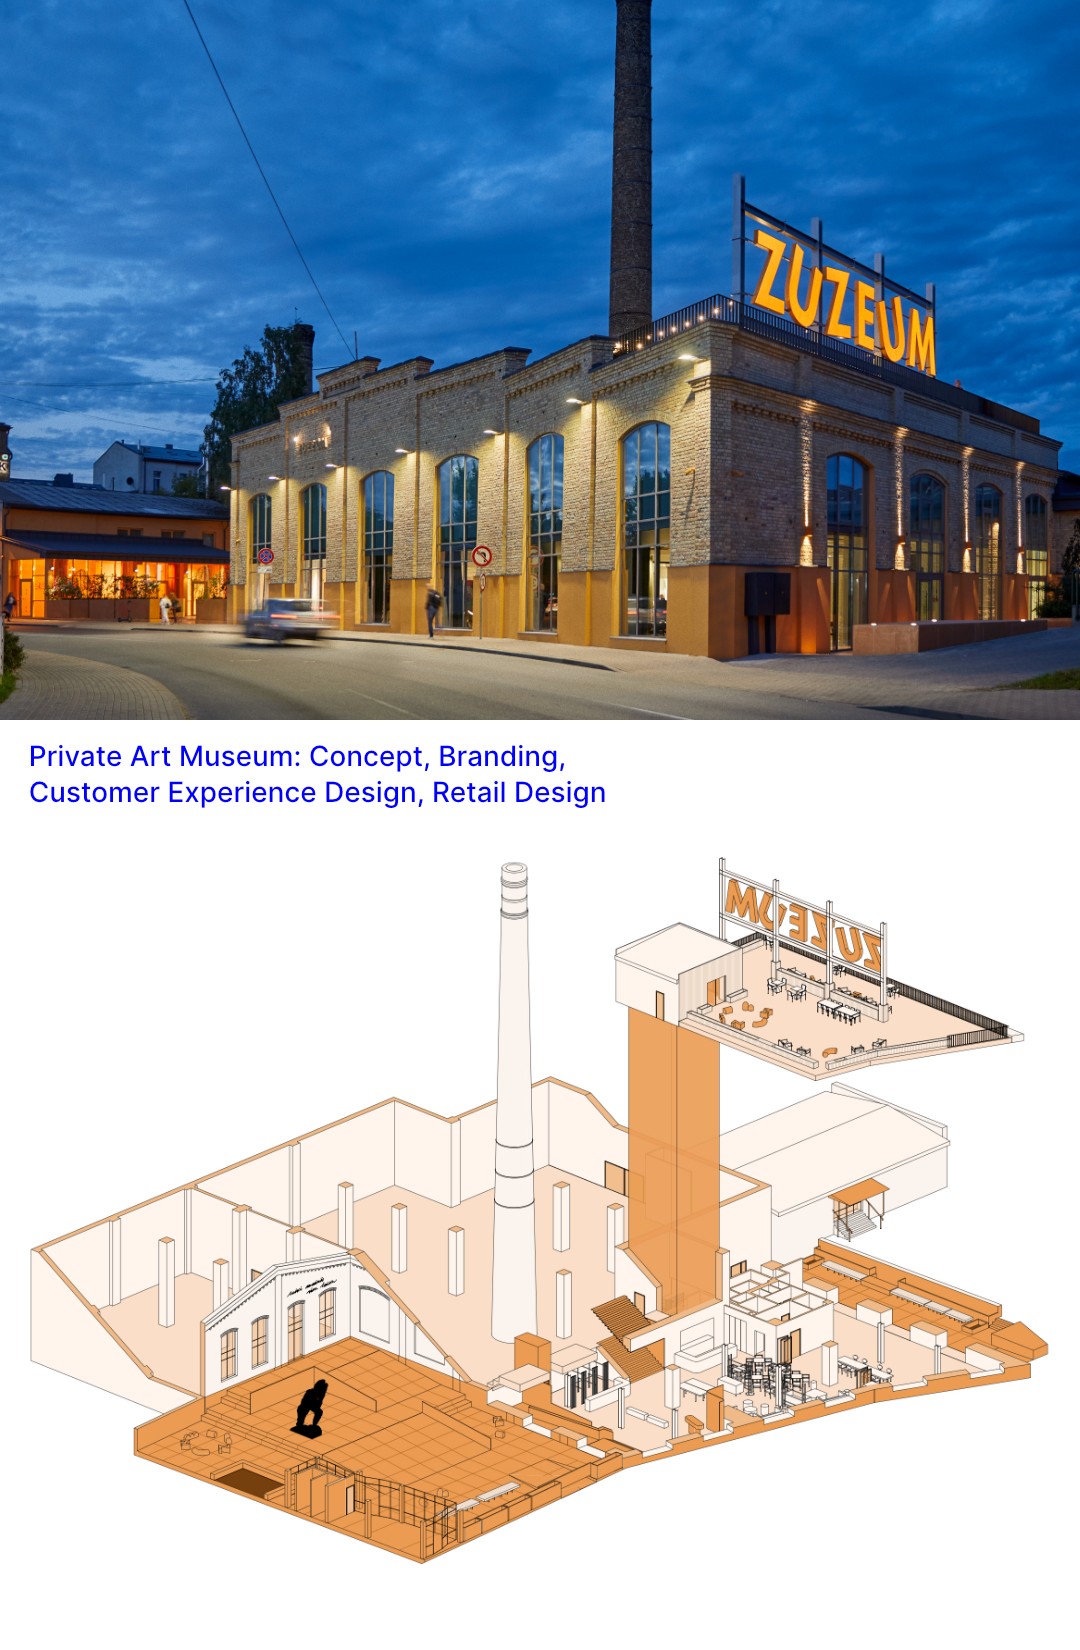 Private Art Museum: Concept, Branding, Customer Experience Design, Retail Design